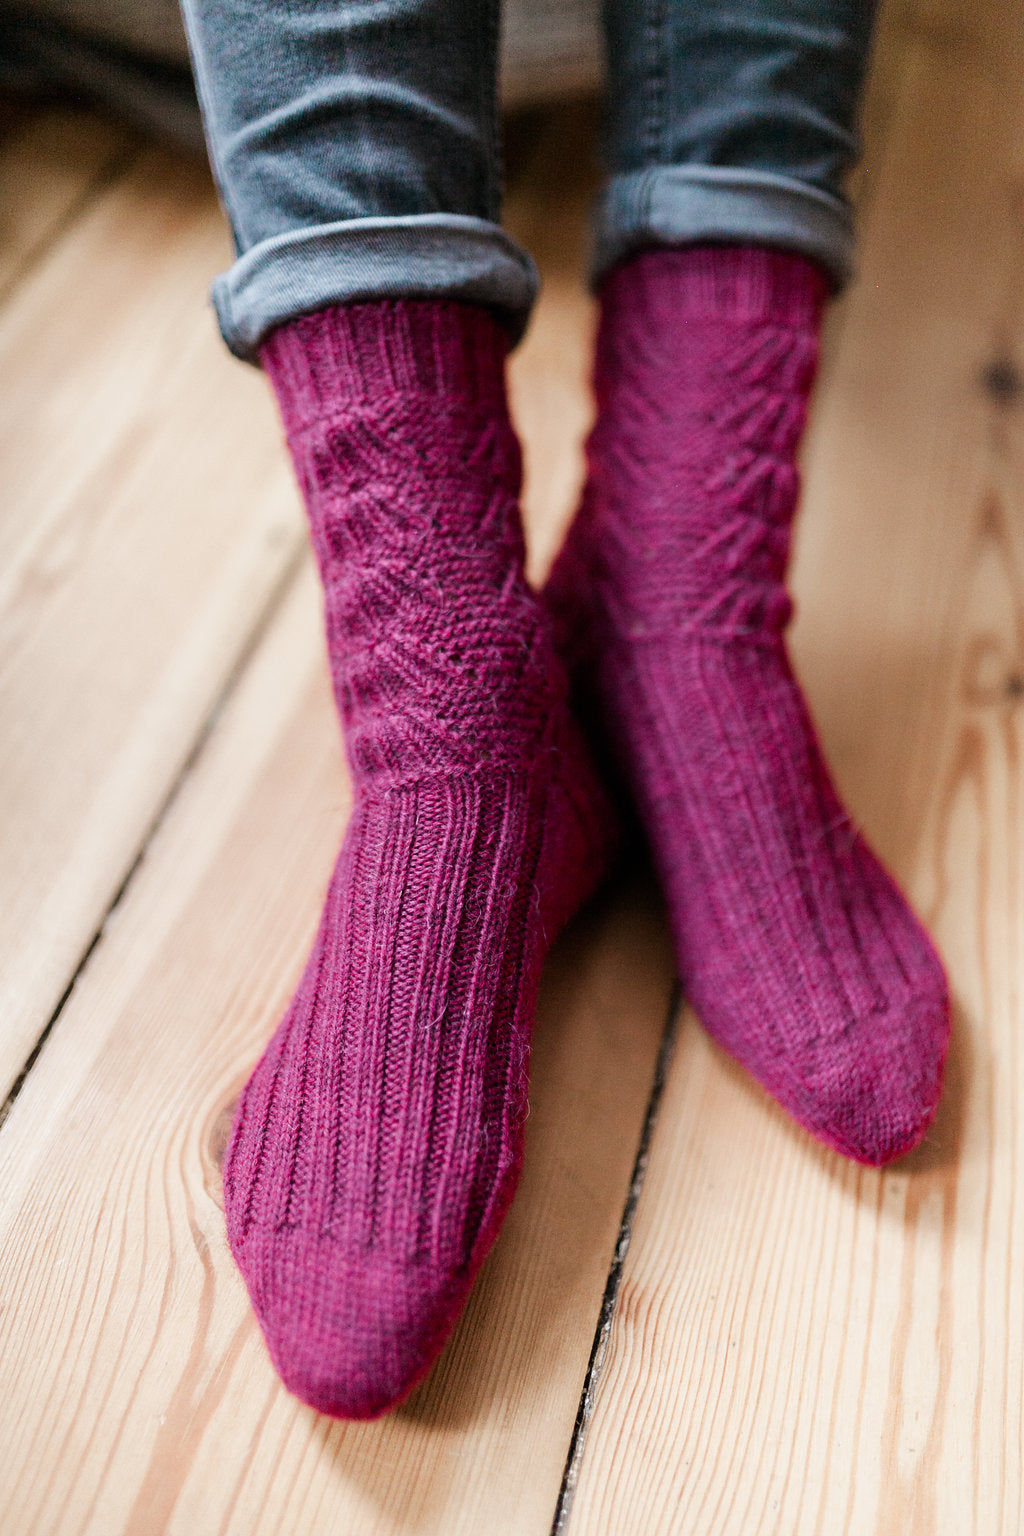 Socks 2018 - Making Stories - Knitting Sustainably.